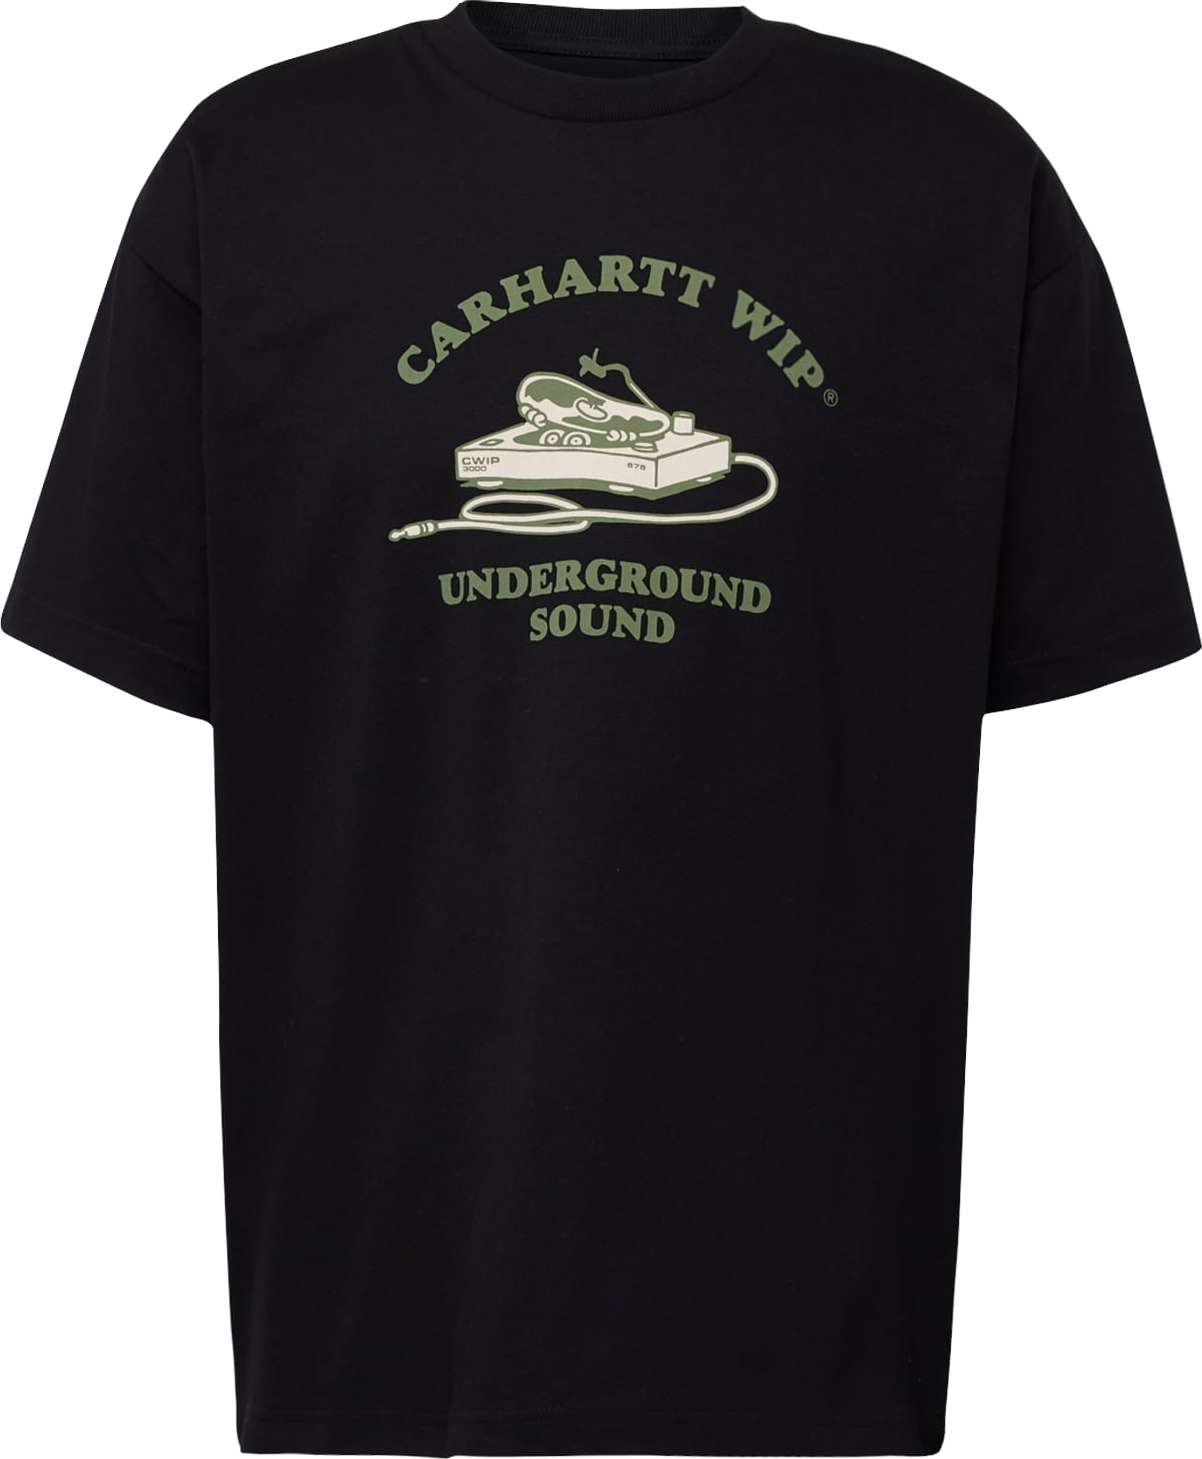 Tričko 'Underground Sound' Carhartt WIP béžová / zelená / černá